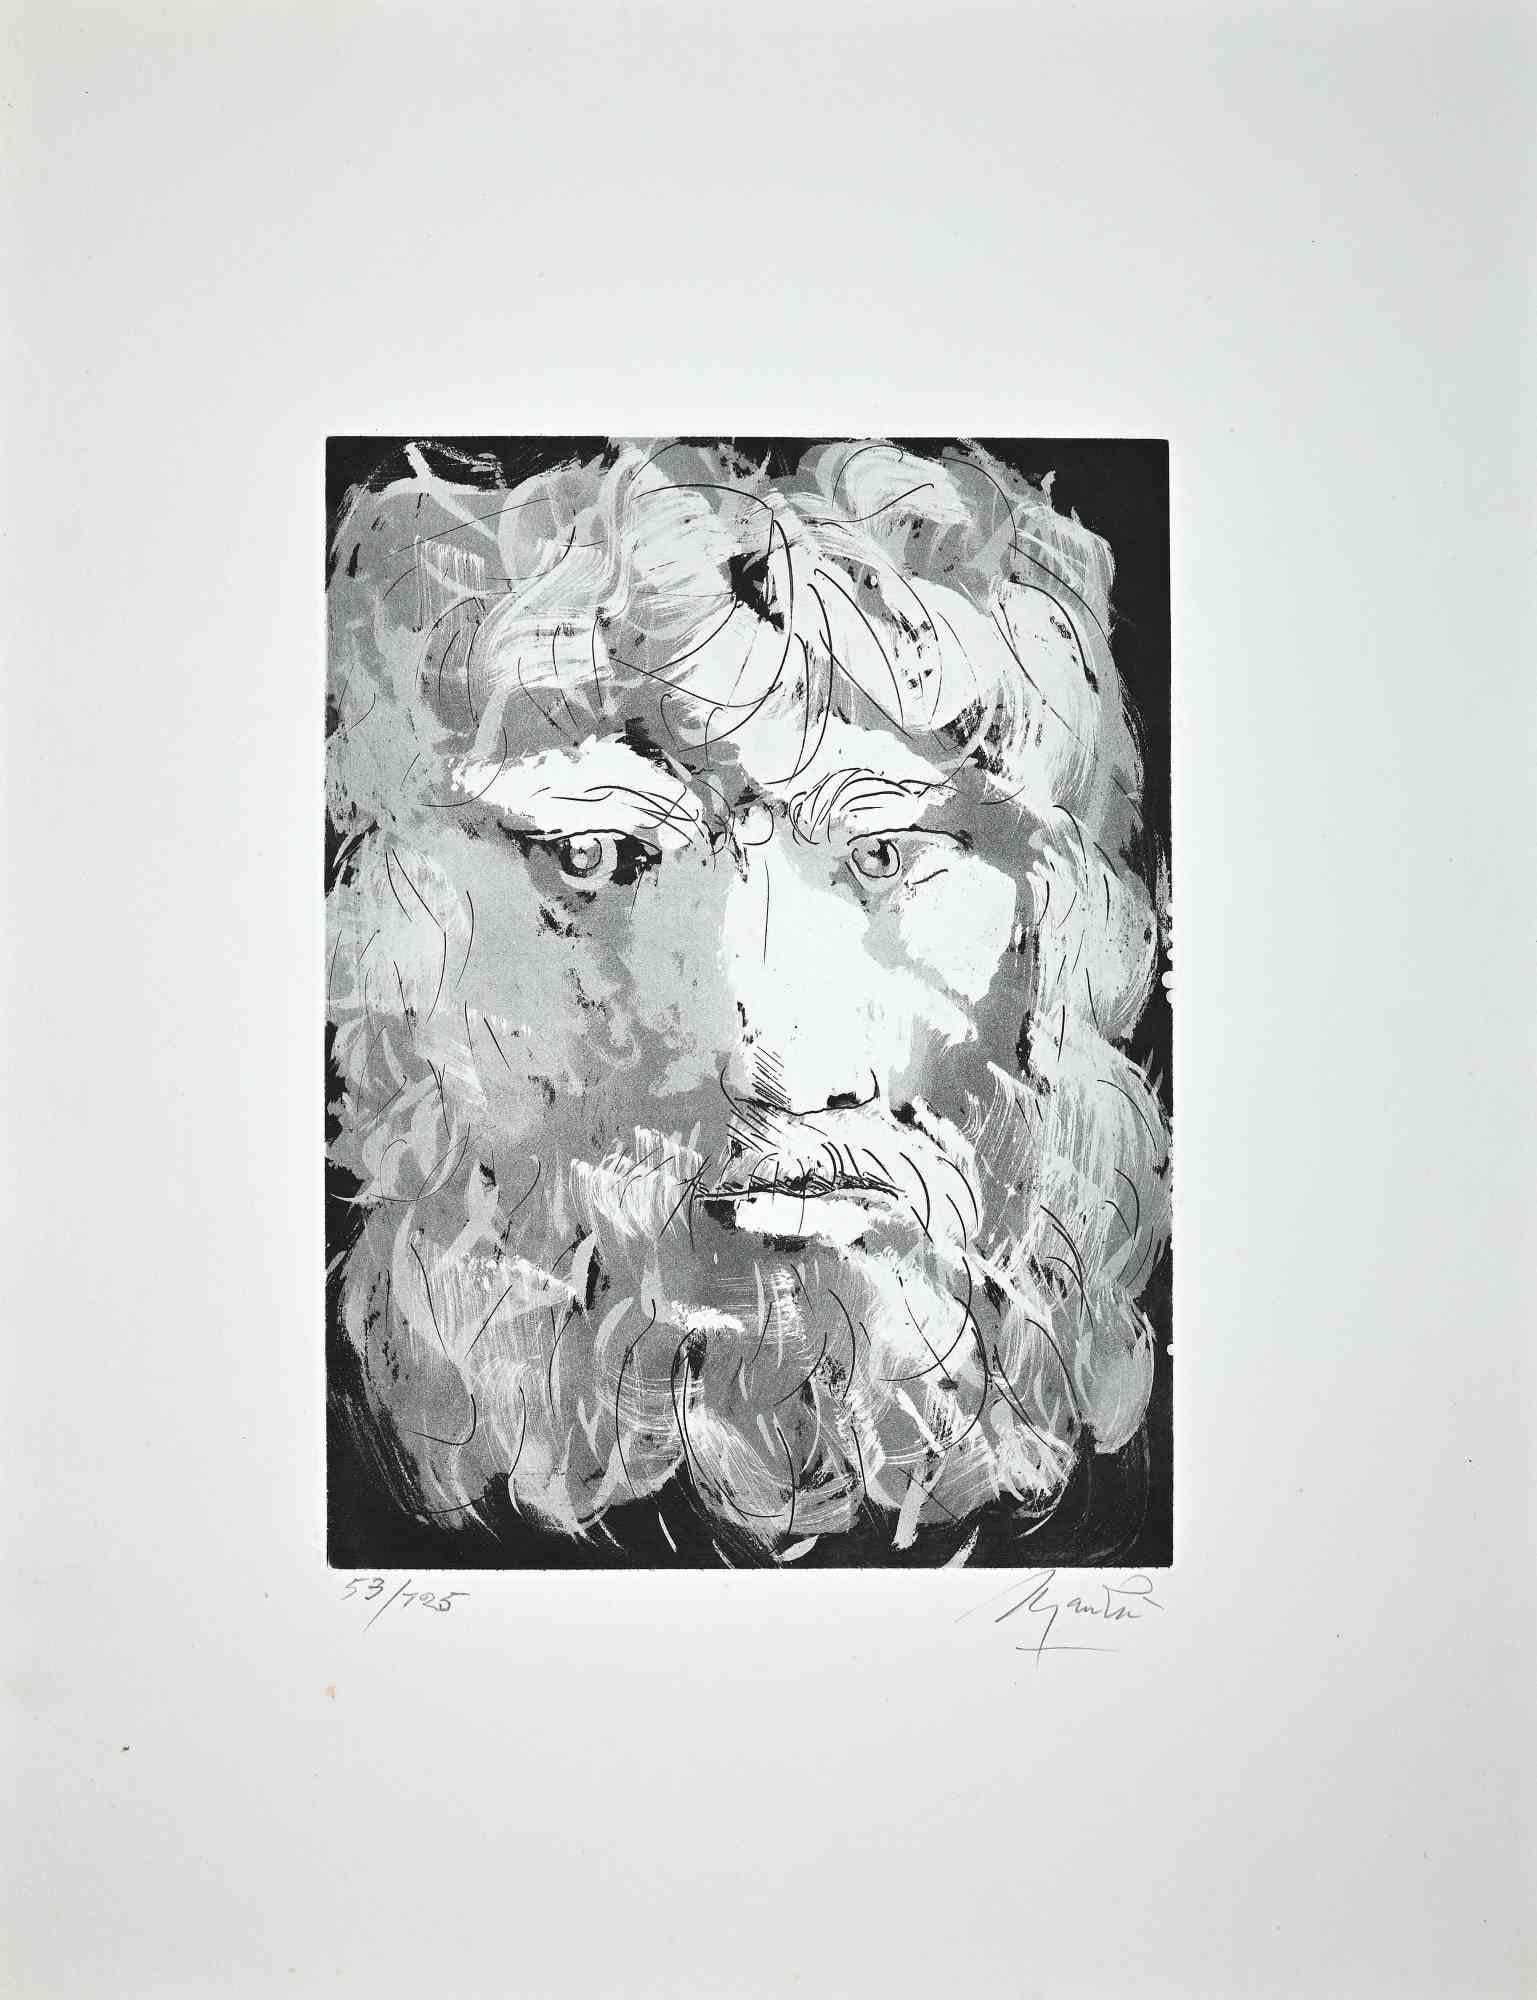 Portrait of King Oedipus  -  Etching by Giacomo Manzù - 1970